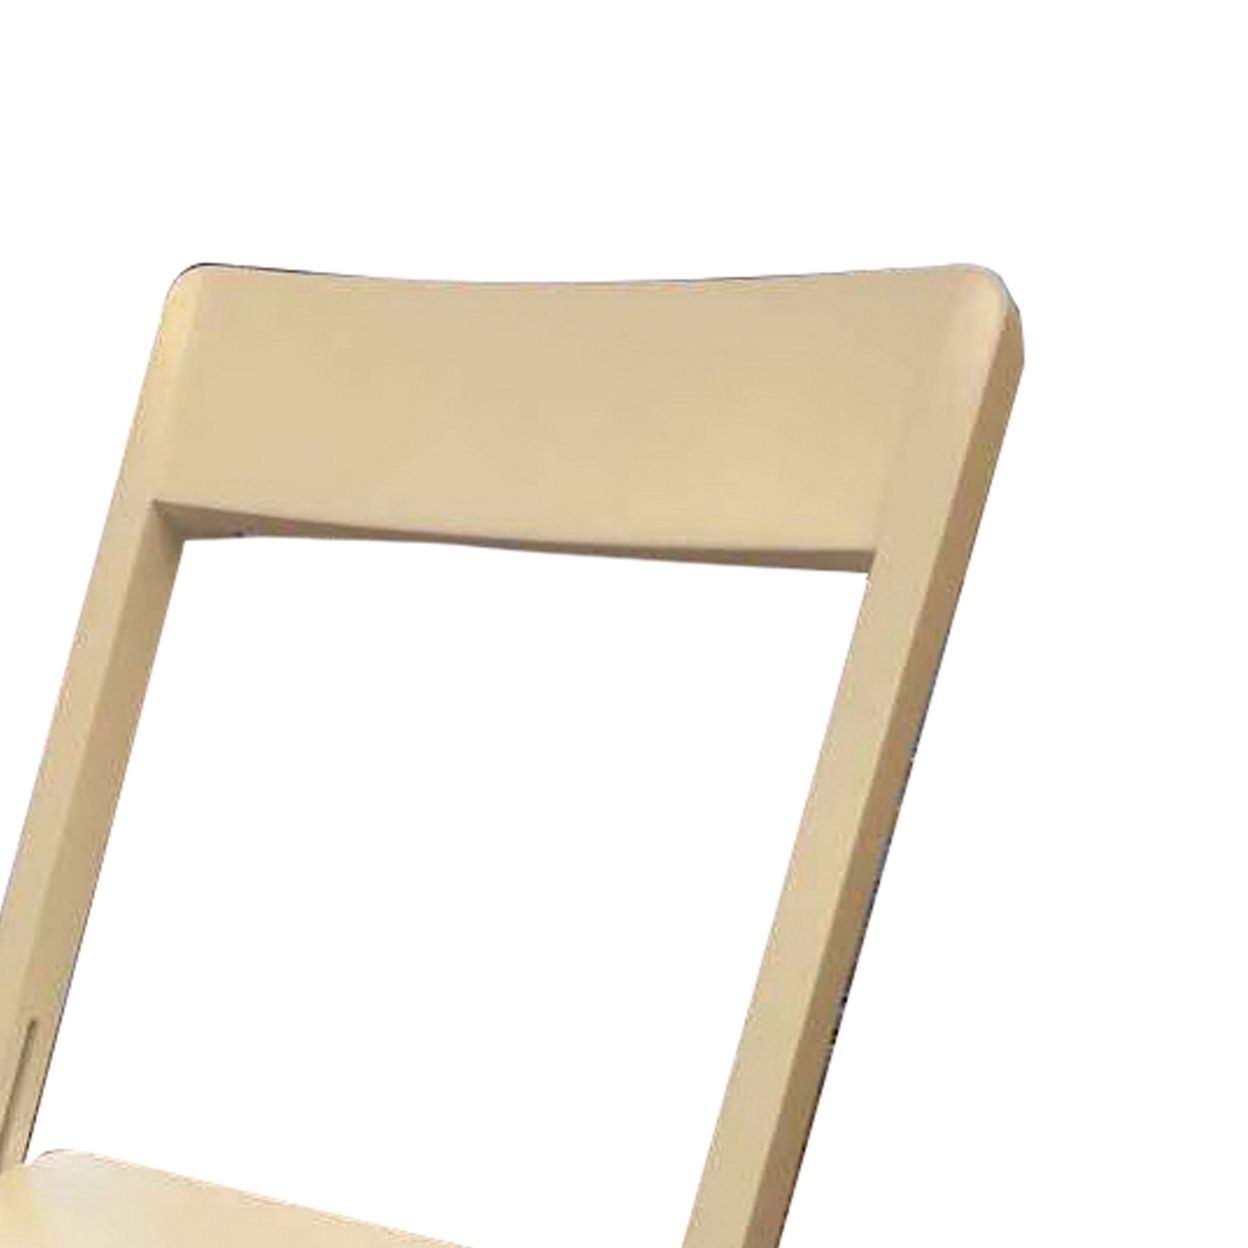 34 Inch Folding Chair, High Quality Metal Frame And Angled Legs, Beige- Saltoro Sherpi